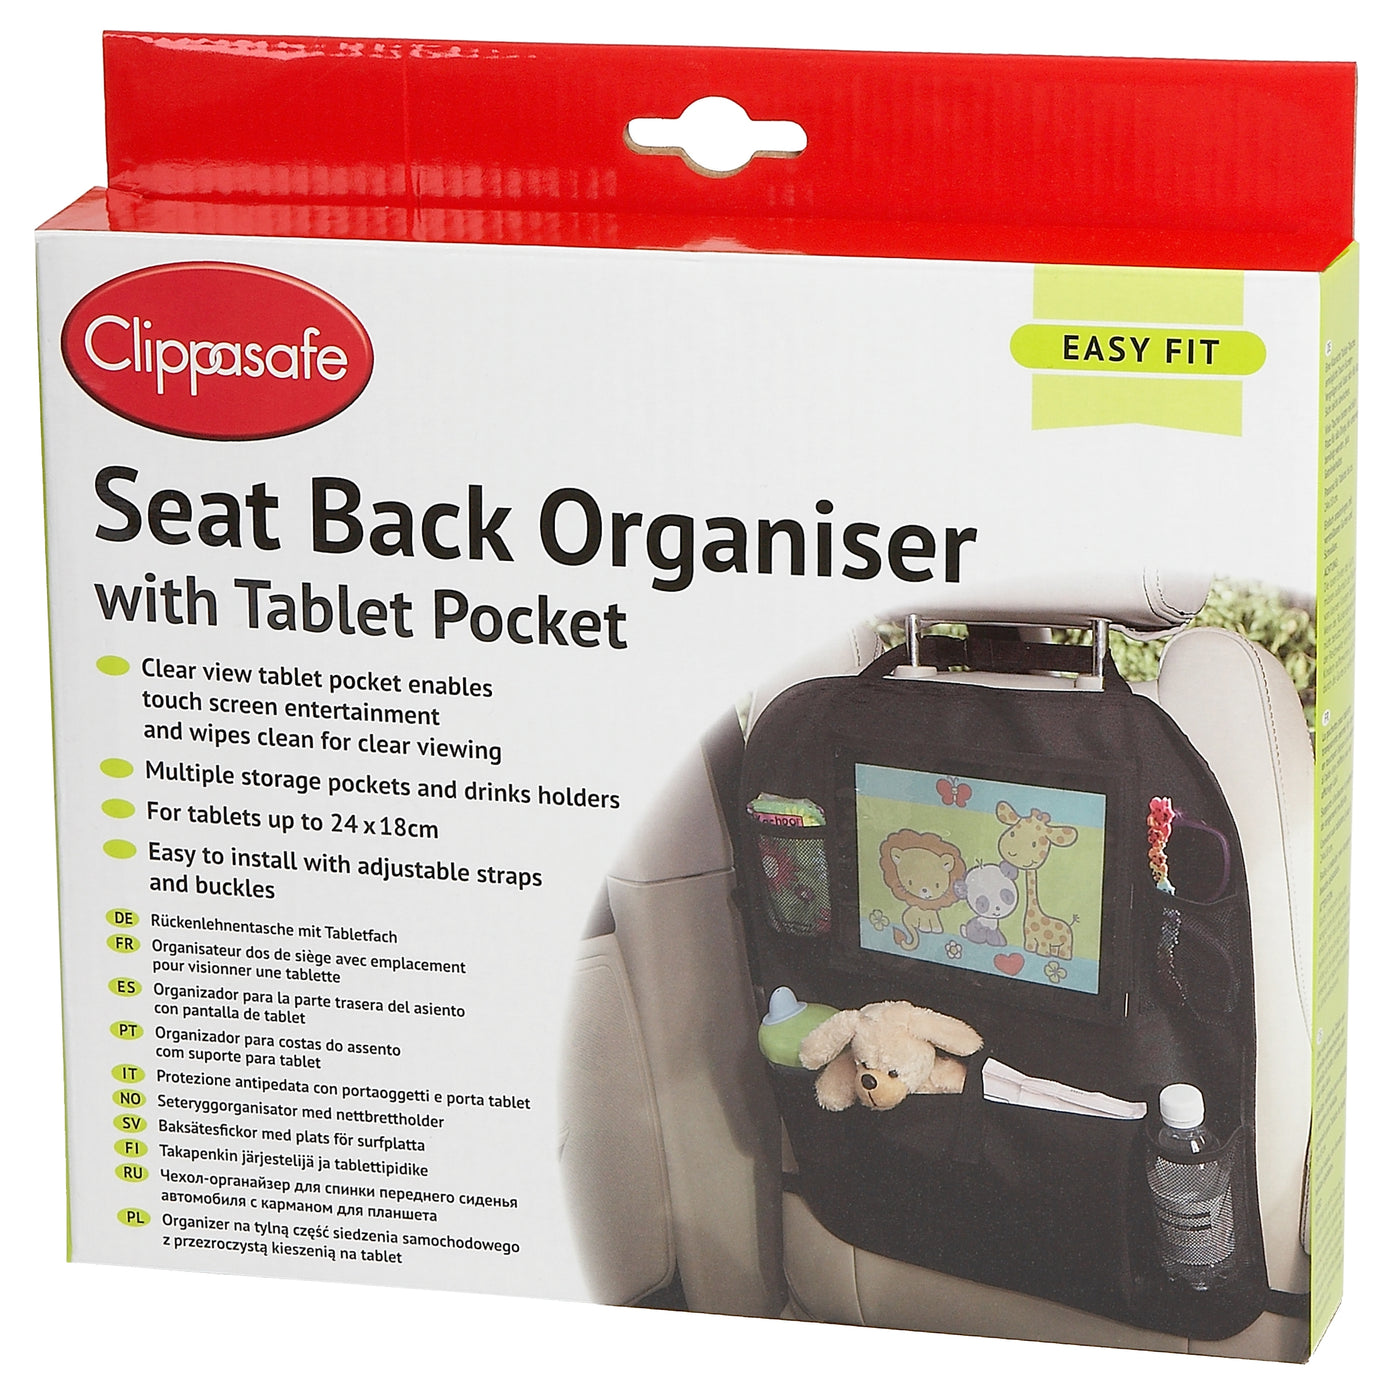 Clippasafe Seat Back Organiser with Tablet Pocket